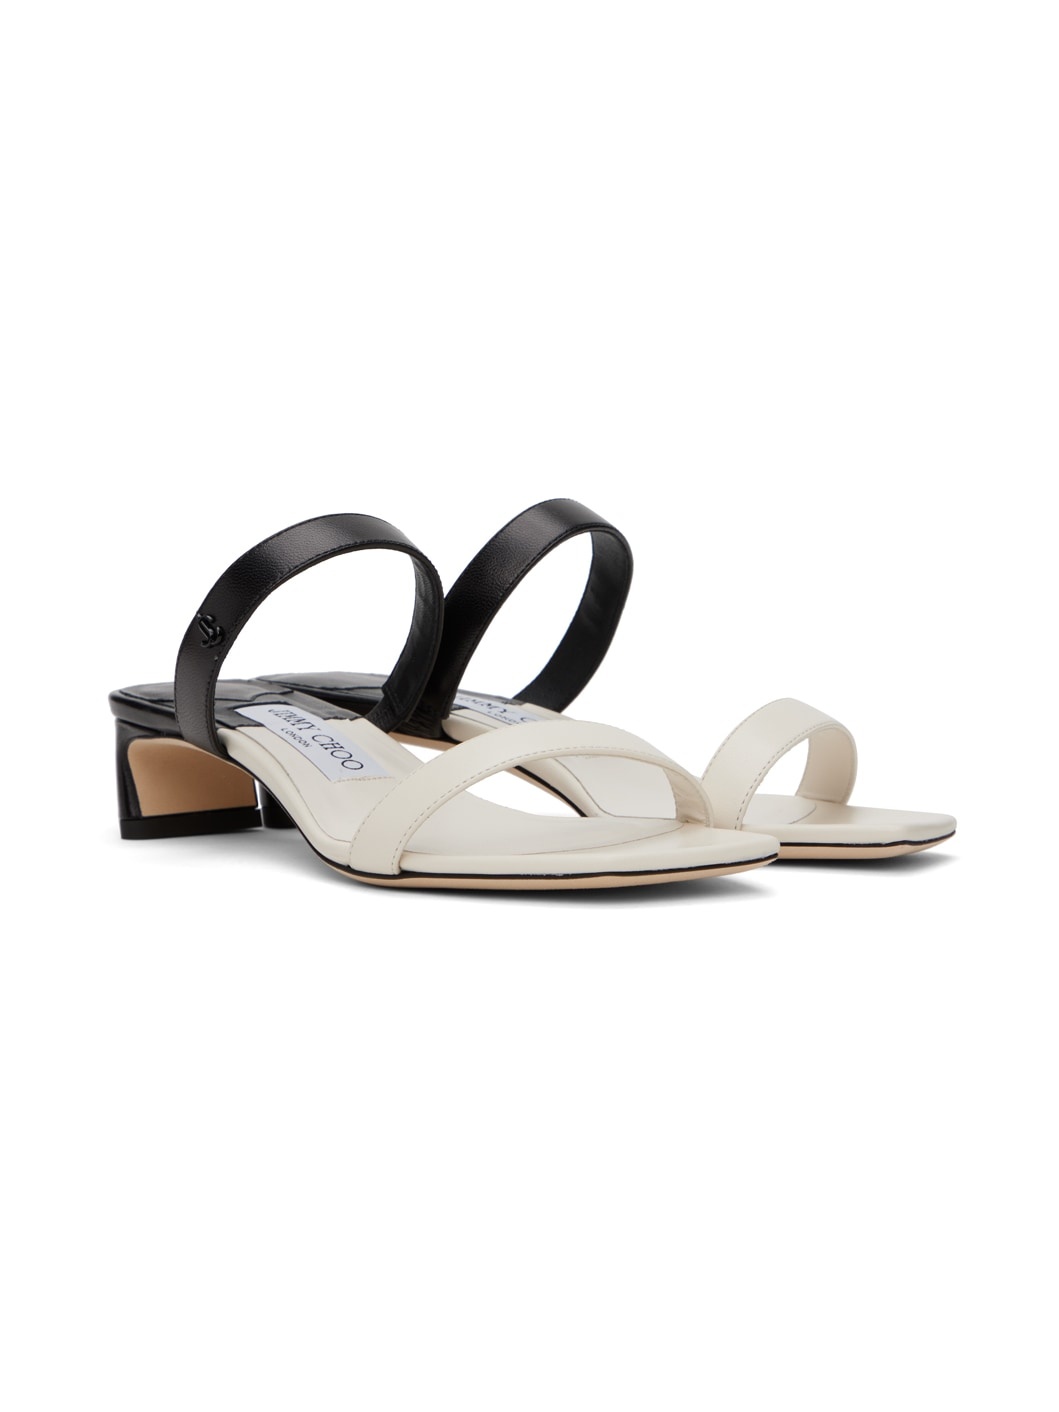 Off-White & Black Kyda 35 Heeled Sandals - 4